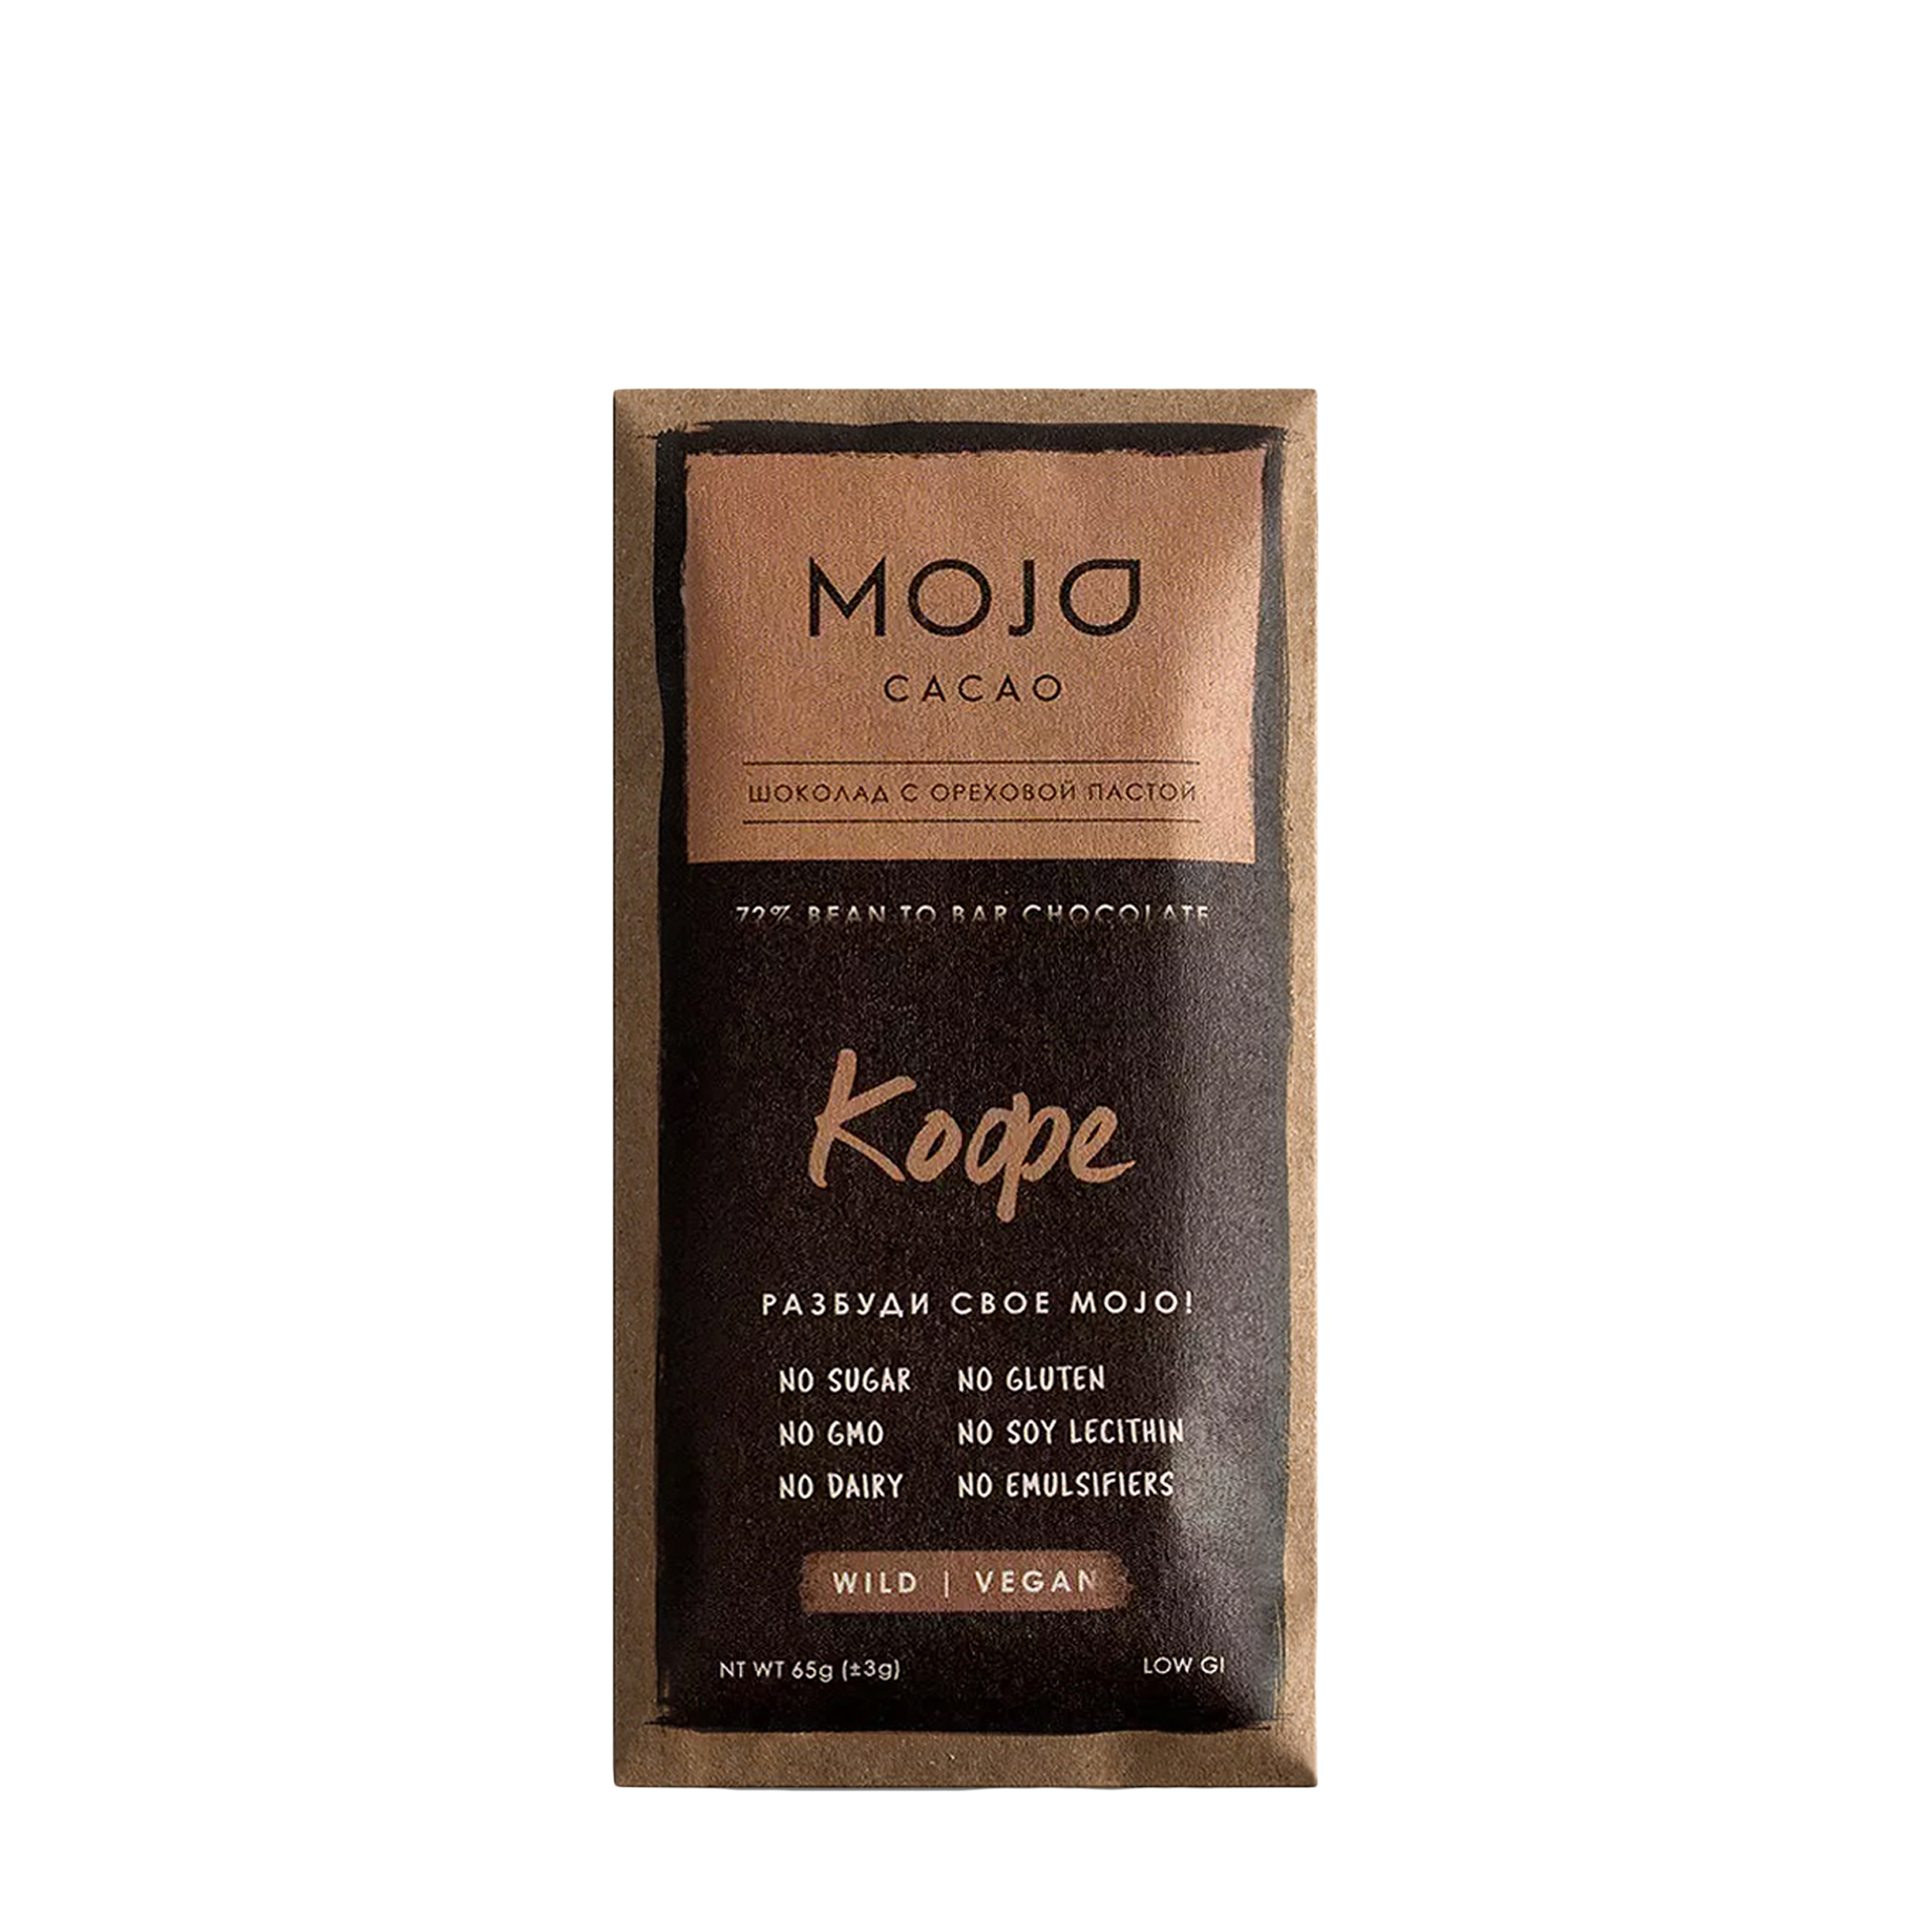 Mojo Cacao Mojo Cacao Горький шоколад (72%) с шоколадно-ореховой пастой Кофе 65 гр